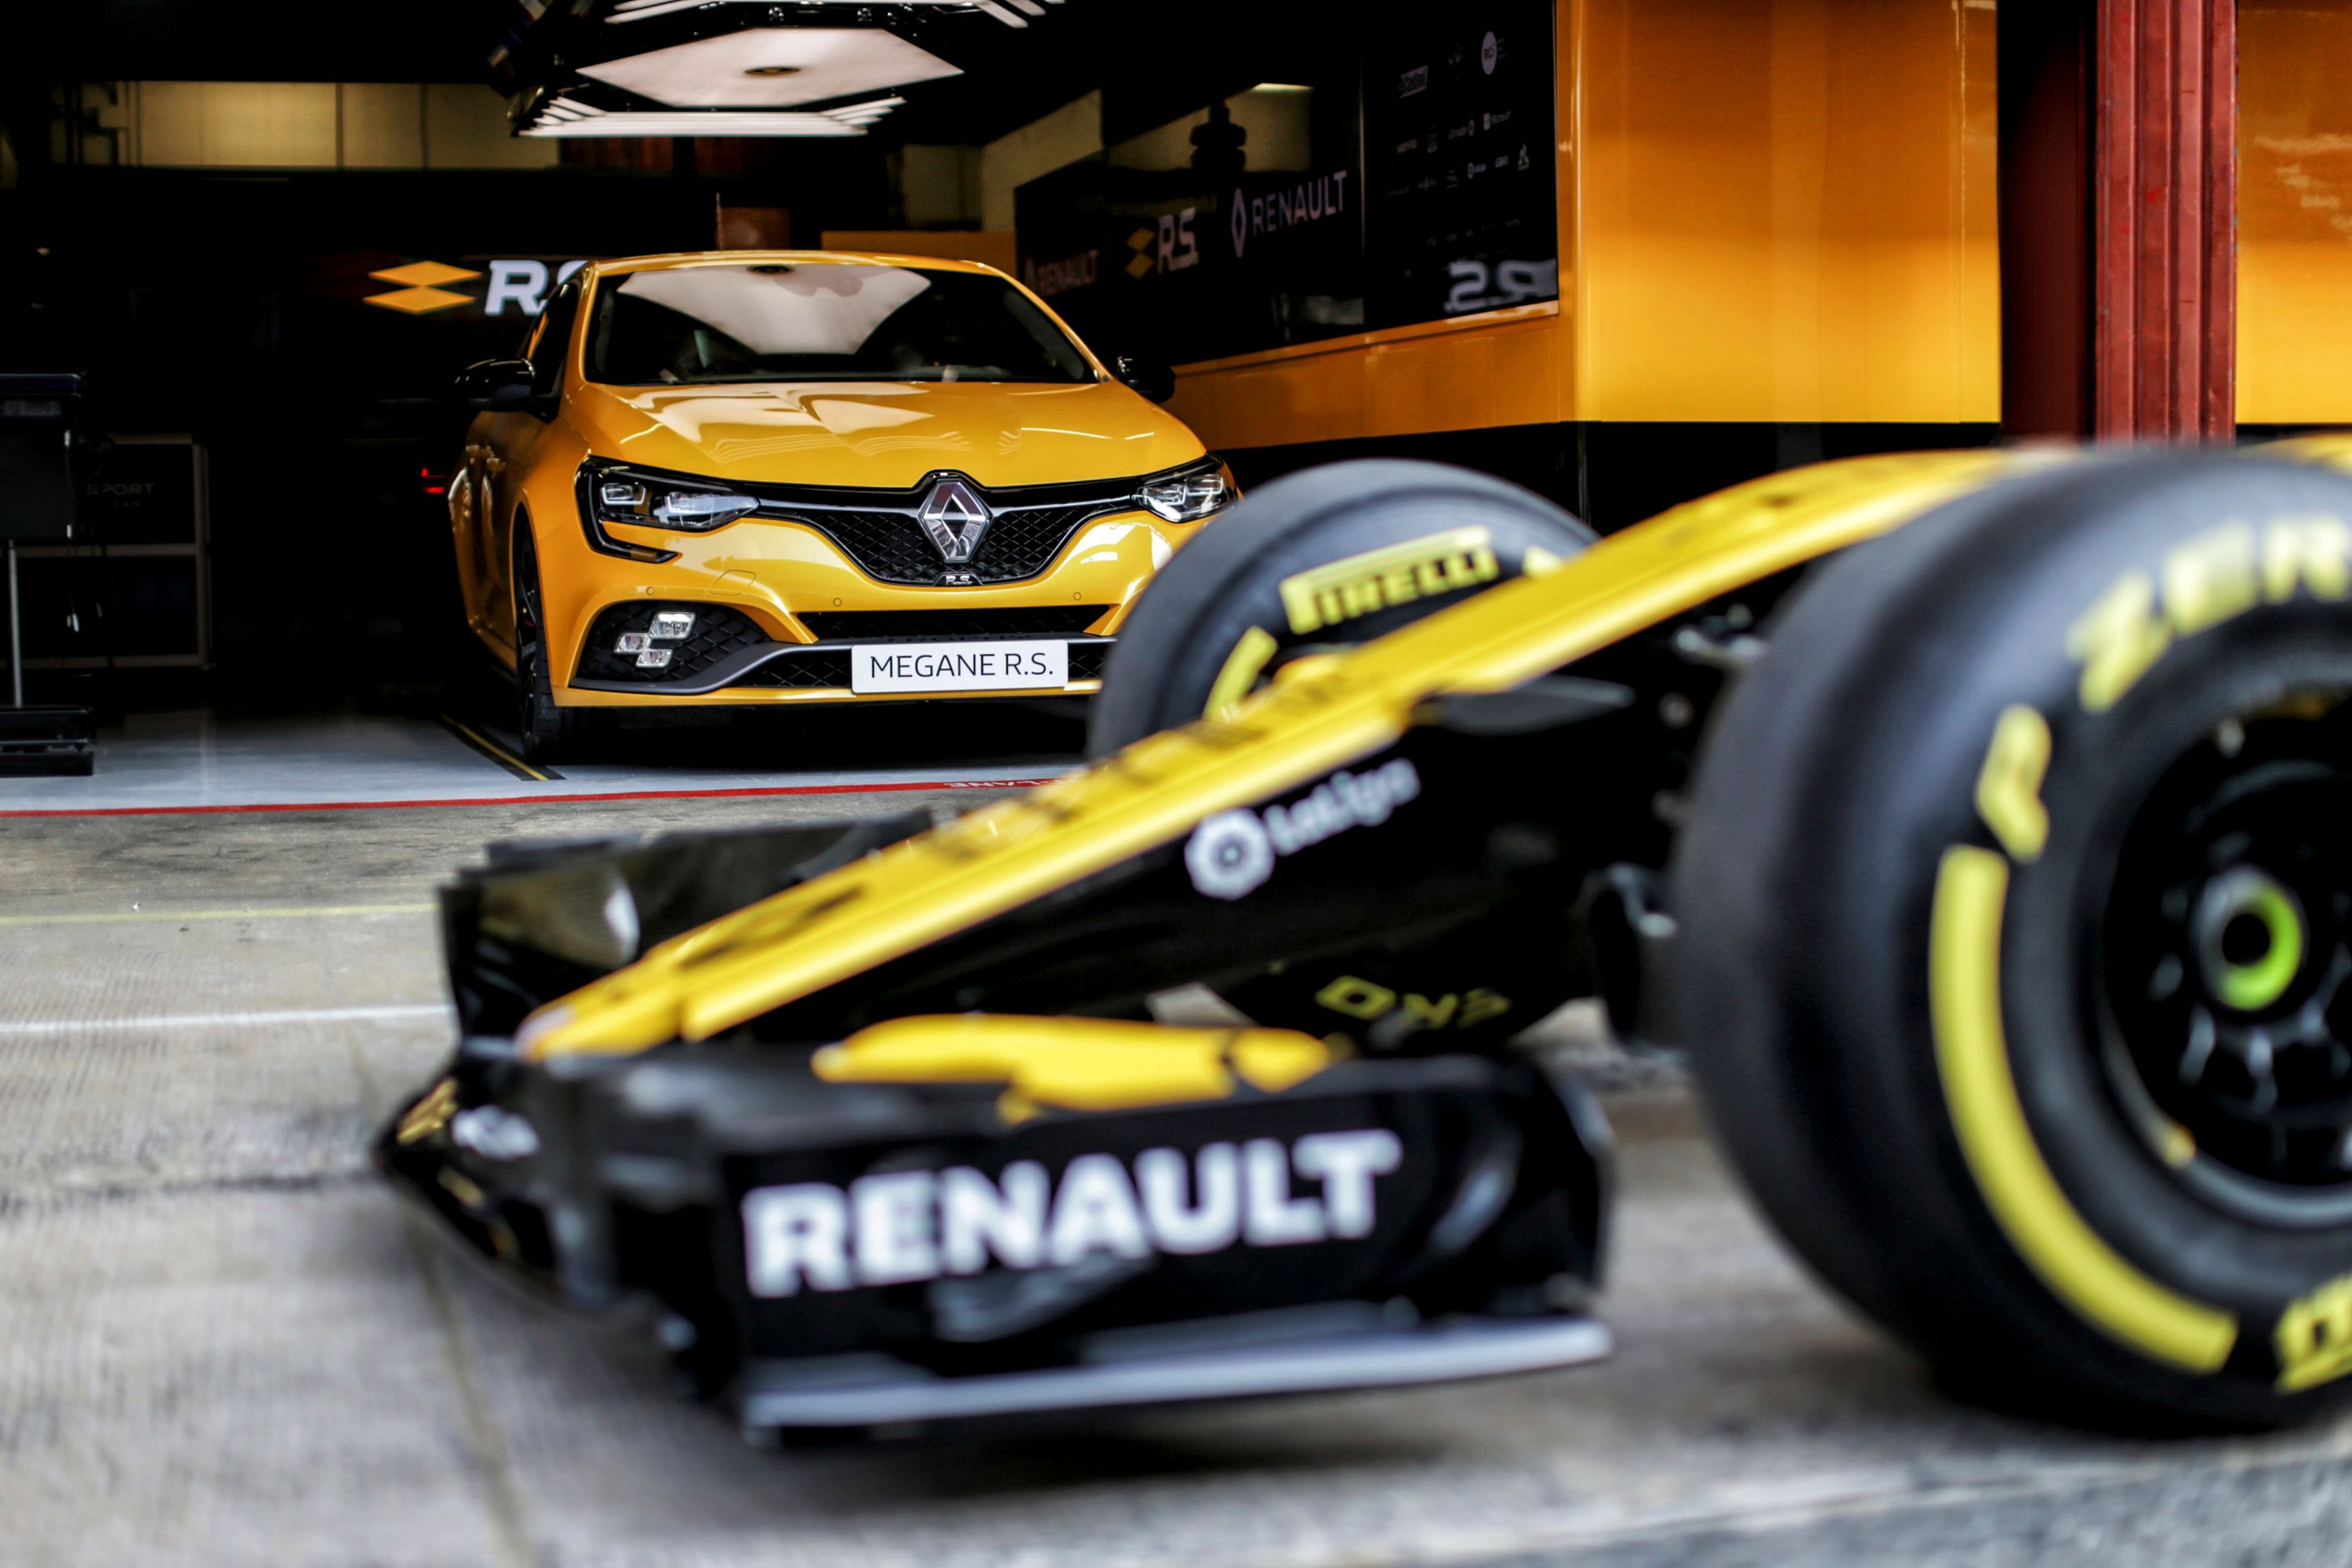 2018 Renault Mégane R.S. Trophy